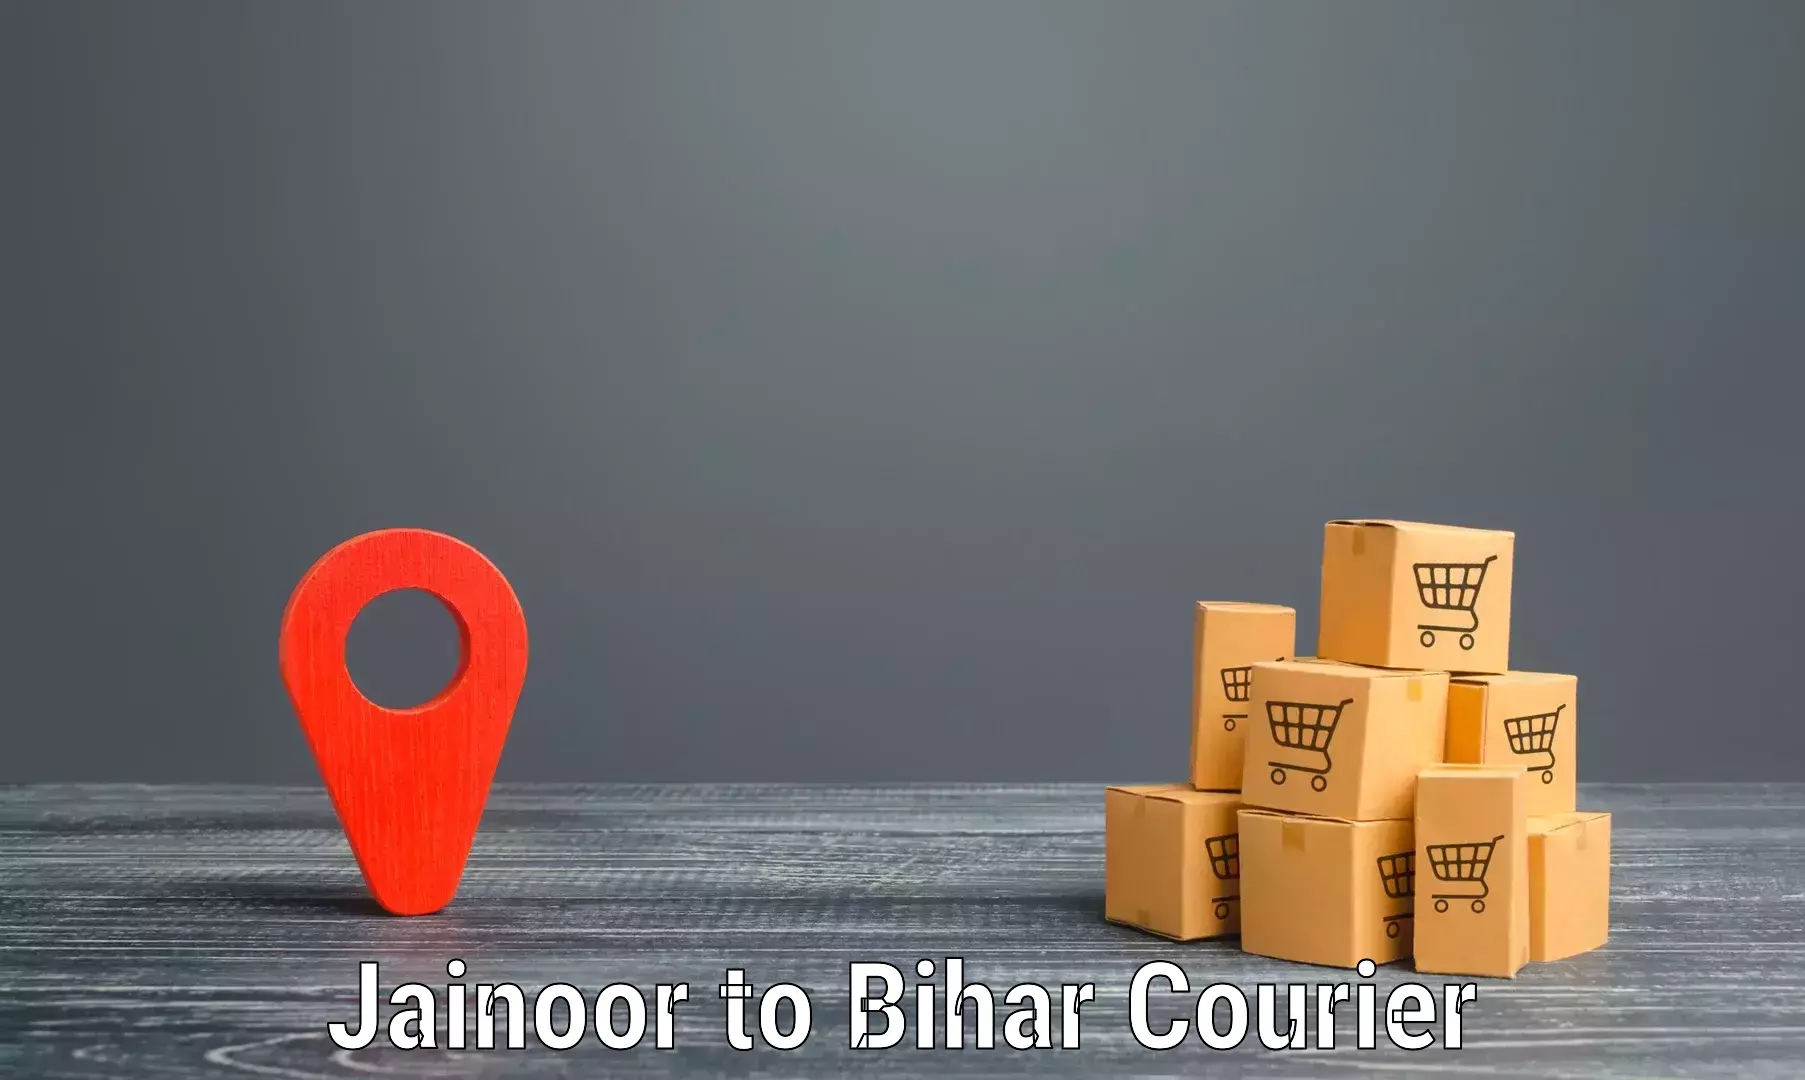 Express delivery capabilities Jainoor to Bhojpur